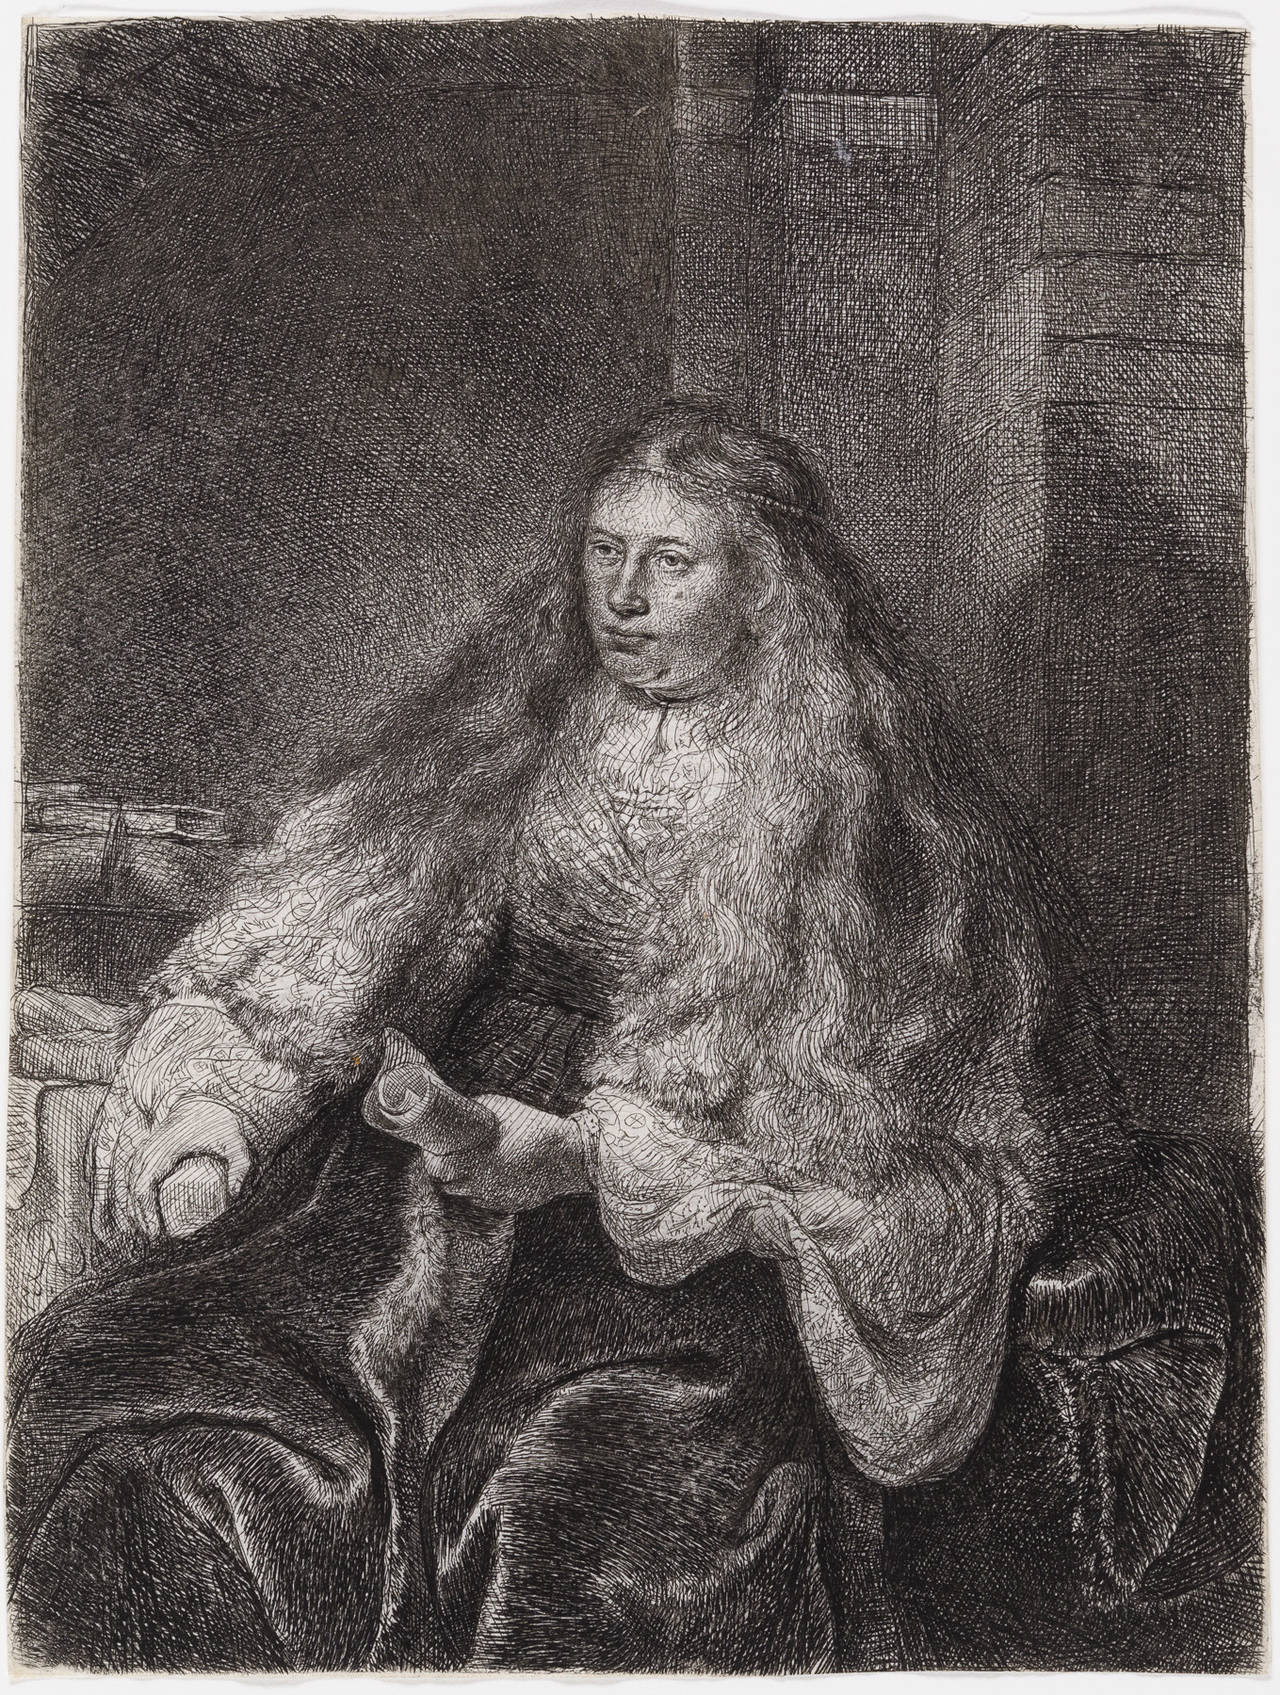 Rembrandt van Rijn Portrait Print - The Great Jewish Bride